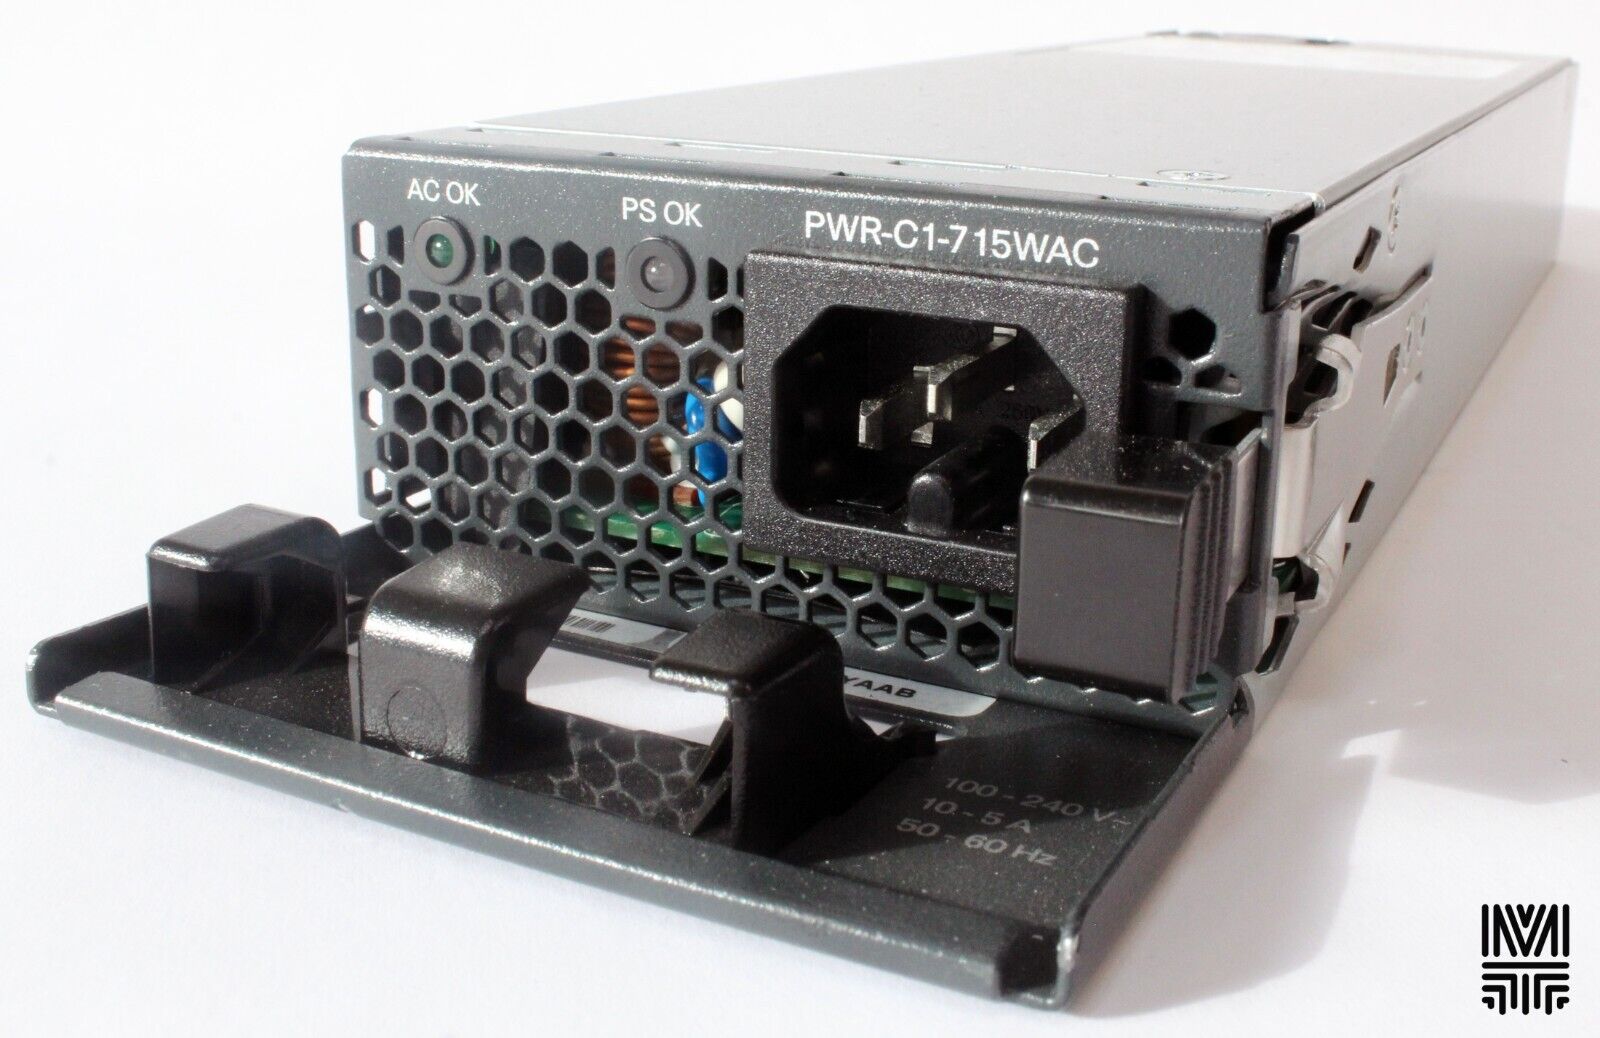 Cisco PWR-C1-715WAC 715 Watt Switch Power Supply, Catalyst 3850, C9300,  TESTED